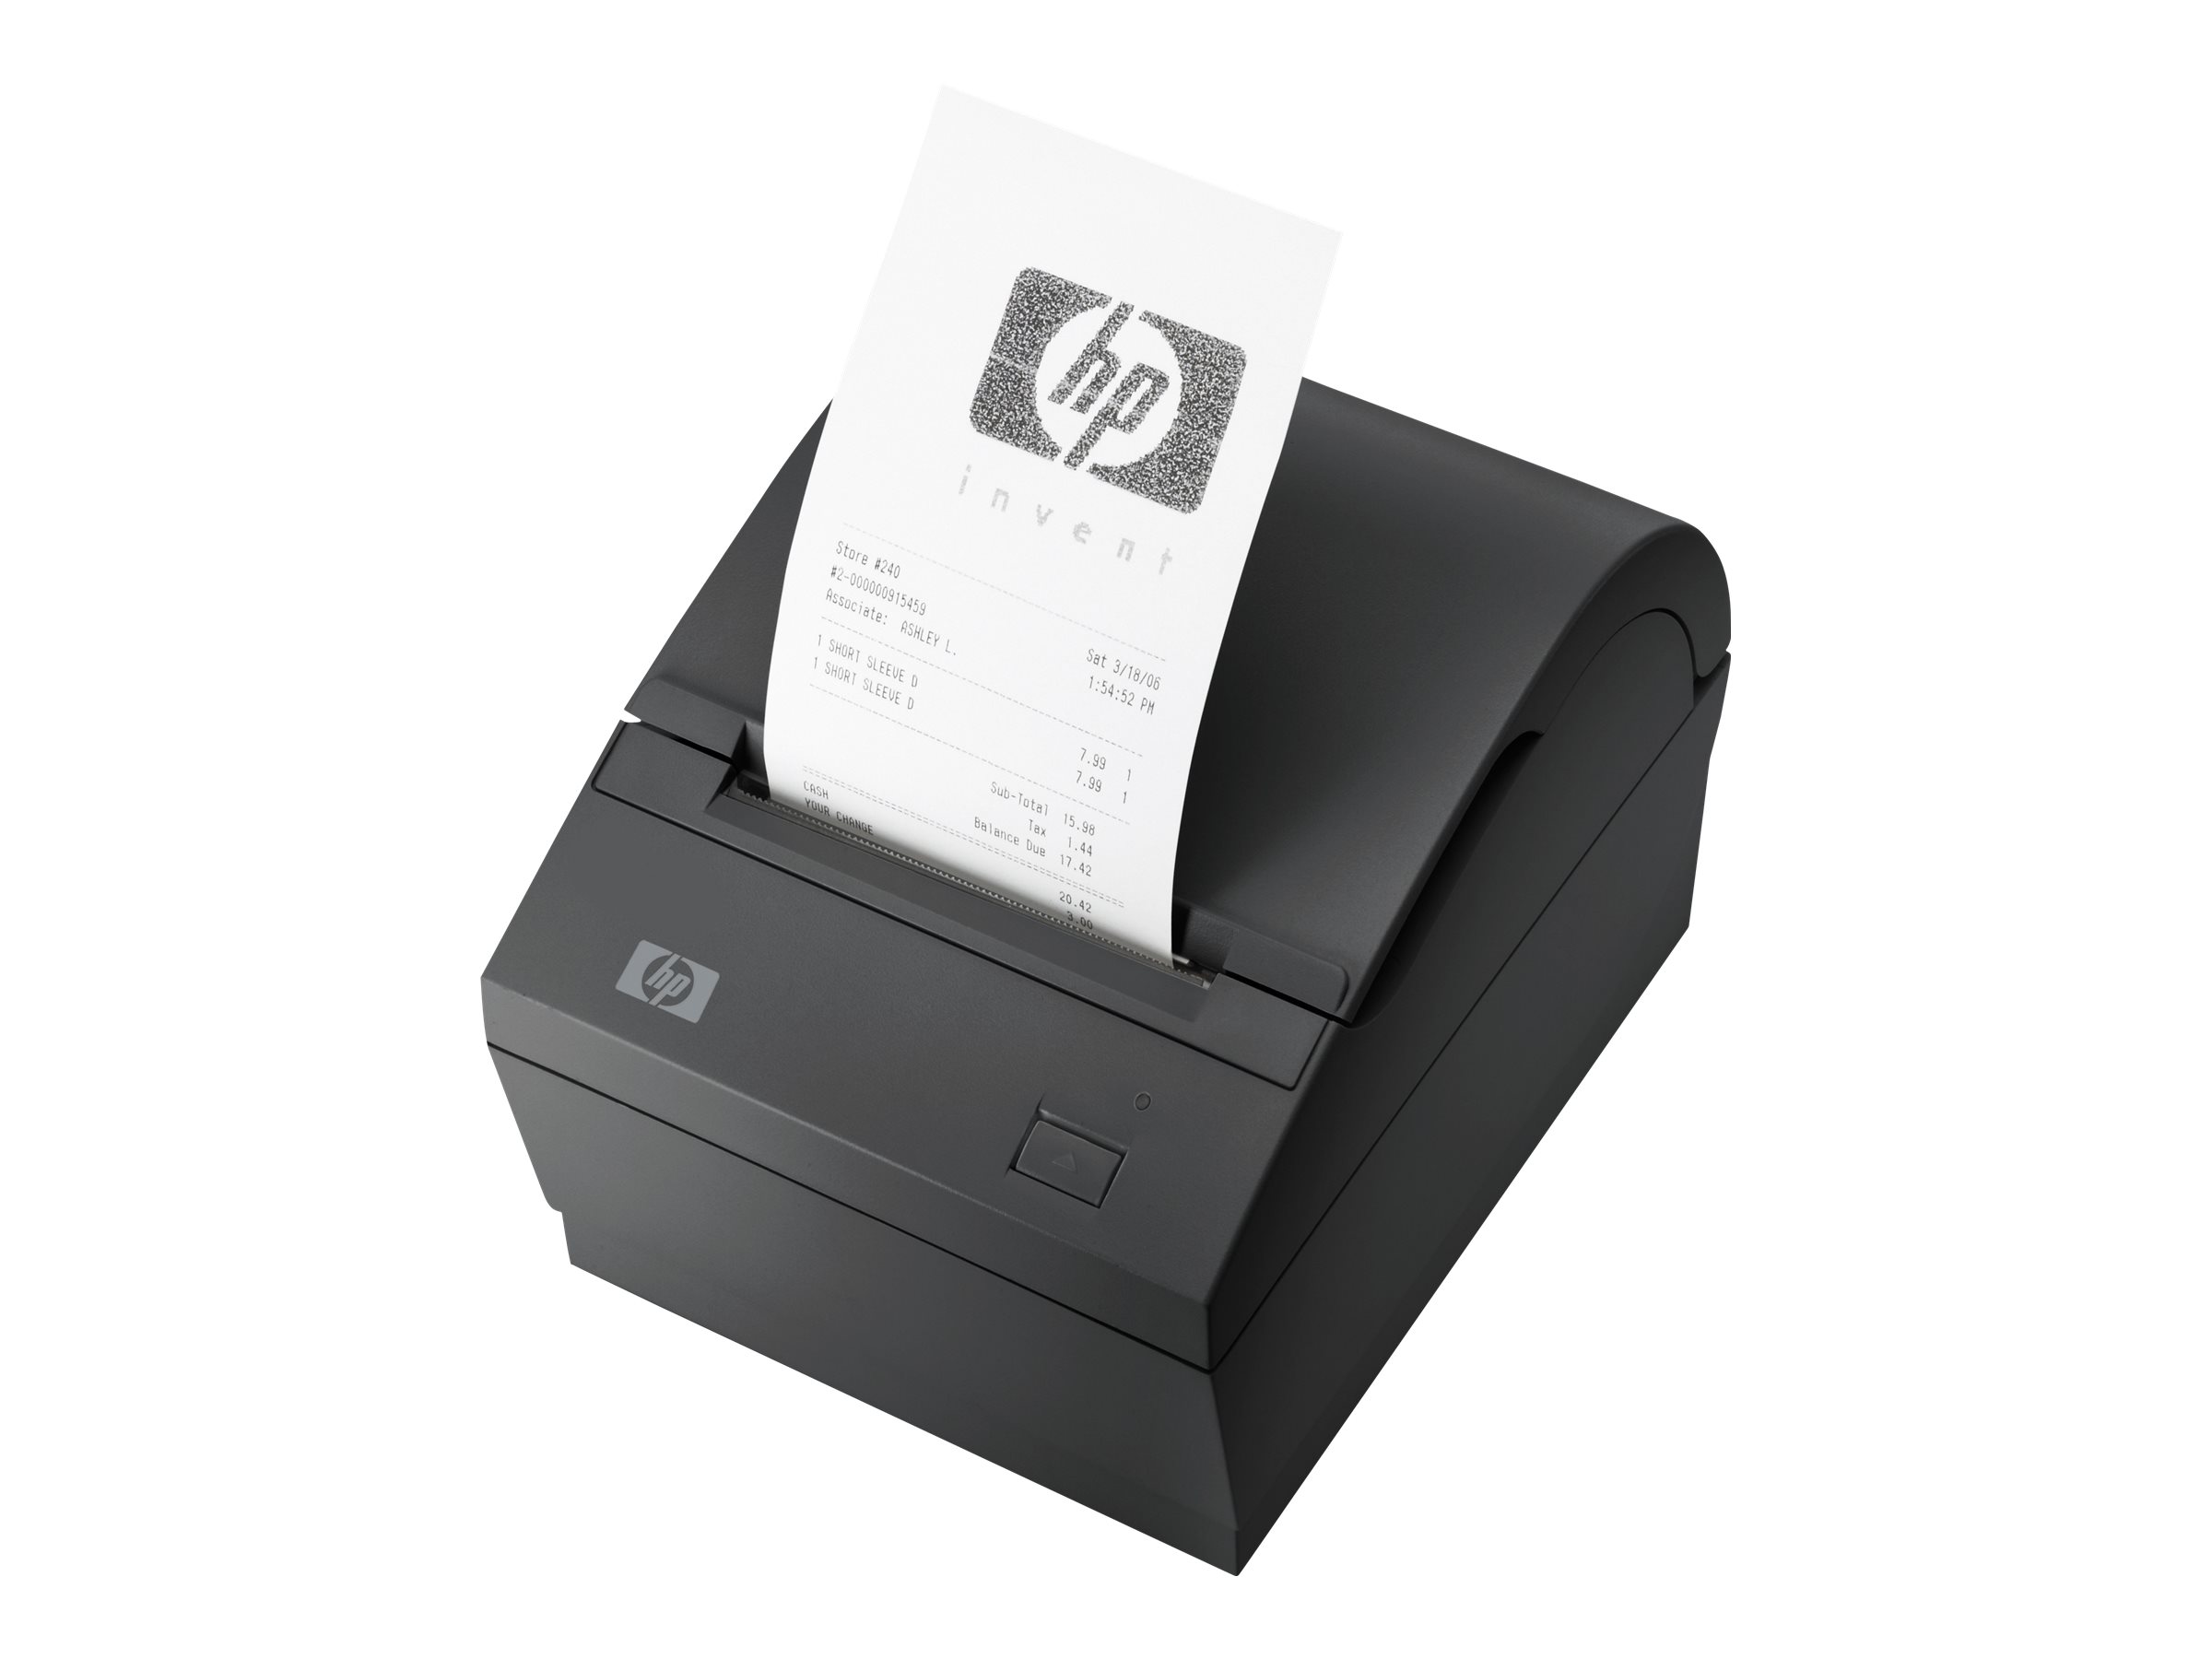 HP Single Station Thermal Receipt Printer